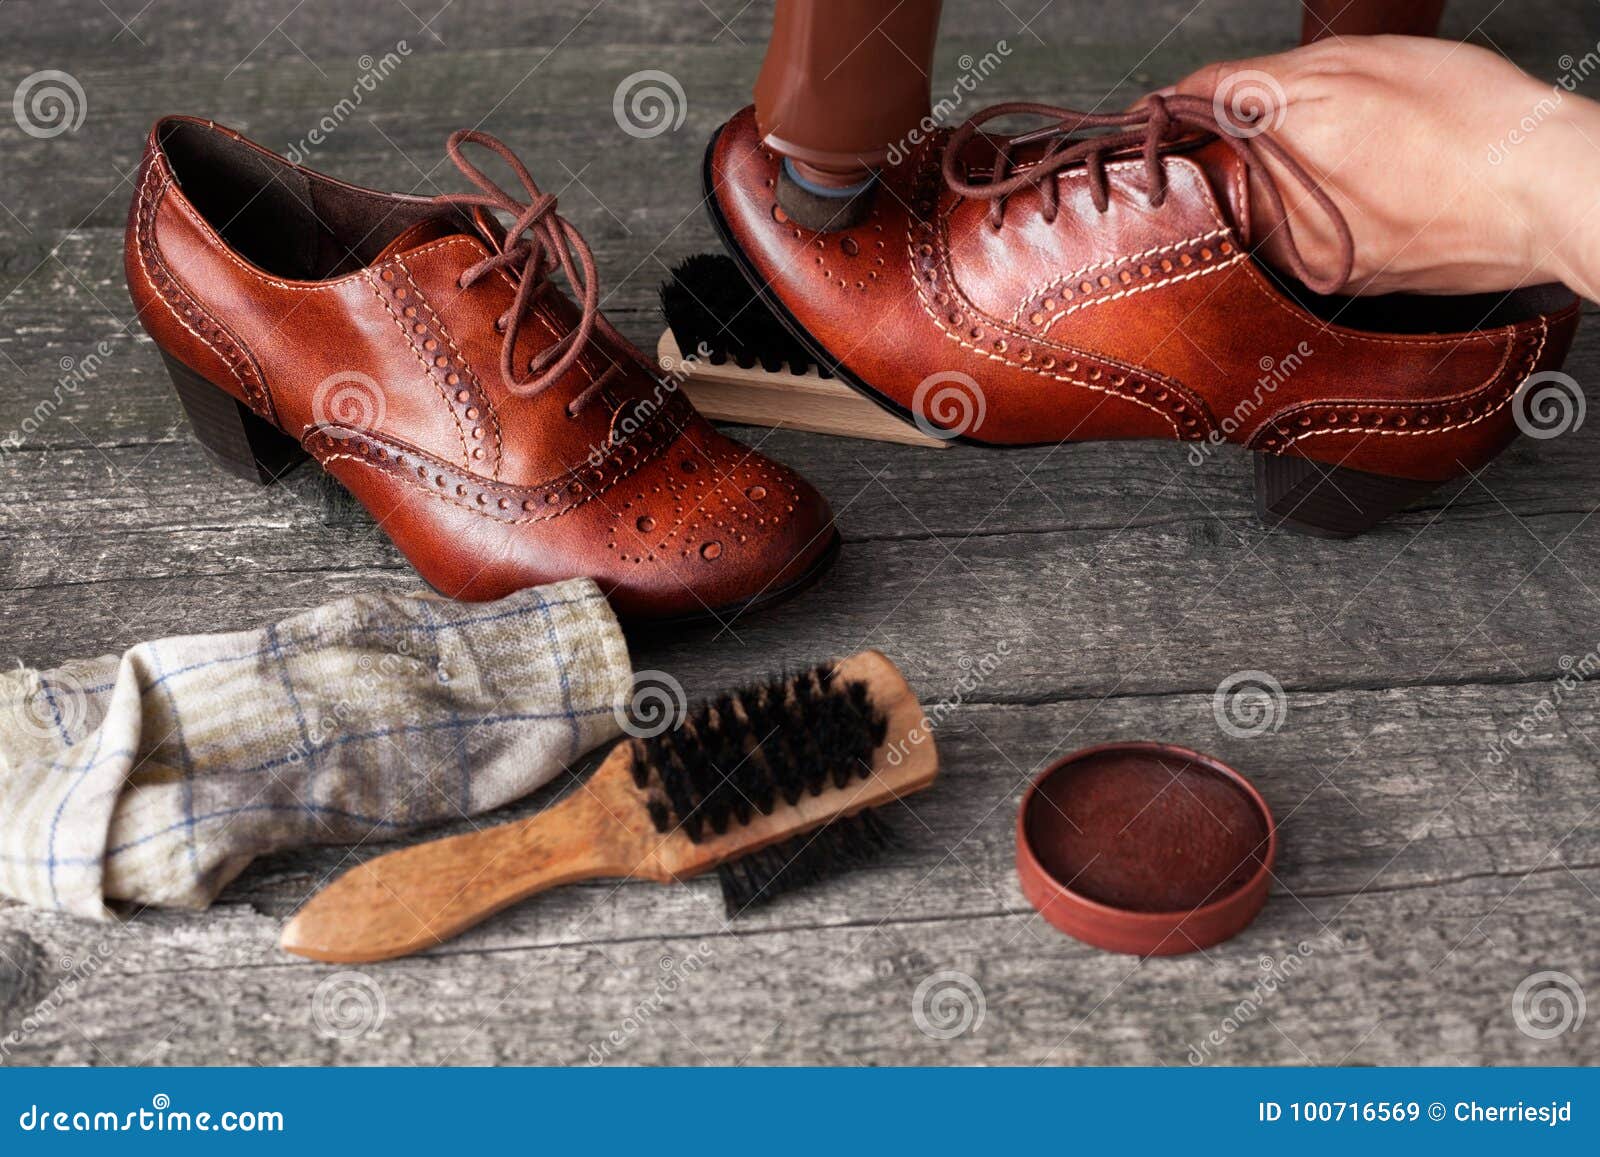 shoemaker applying shoe shiner on shoe